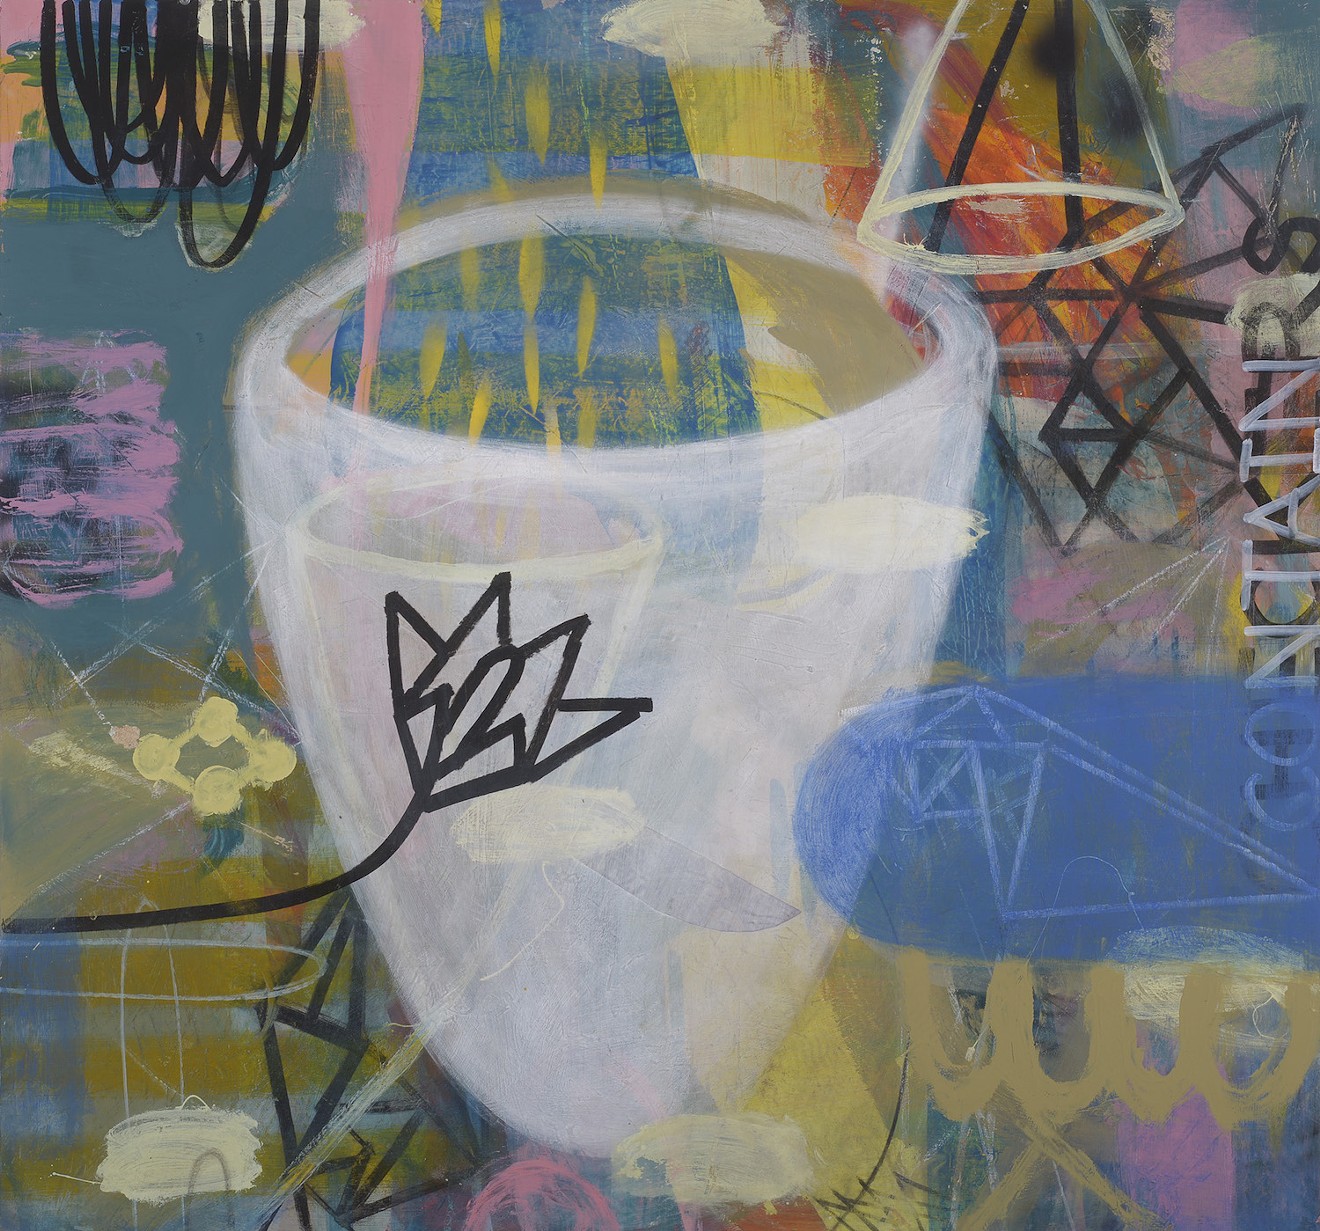 Michael Gadlin, "Balance Envy,” acrylic, house paint, charcoal, ink, spray paint on canvas.